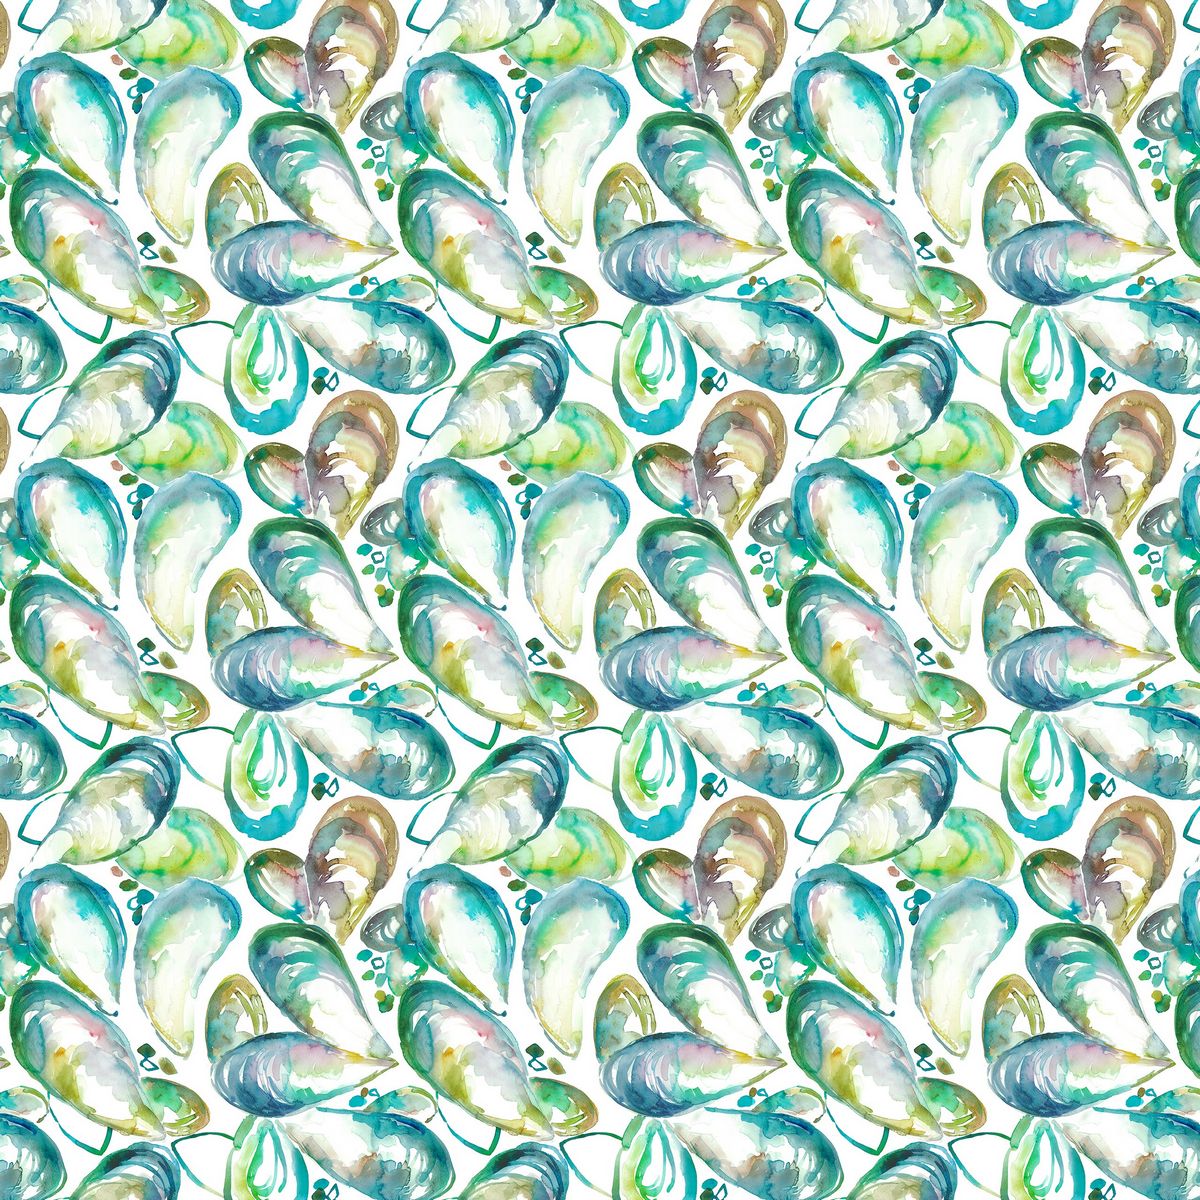 Mussel Shells Kelpie Fabric by Voyage Maison